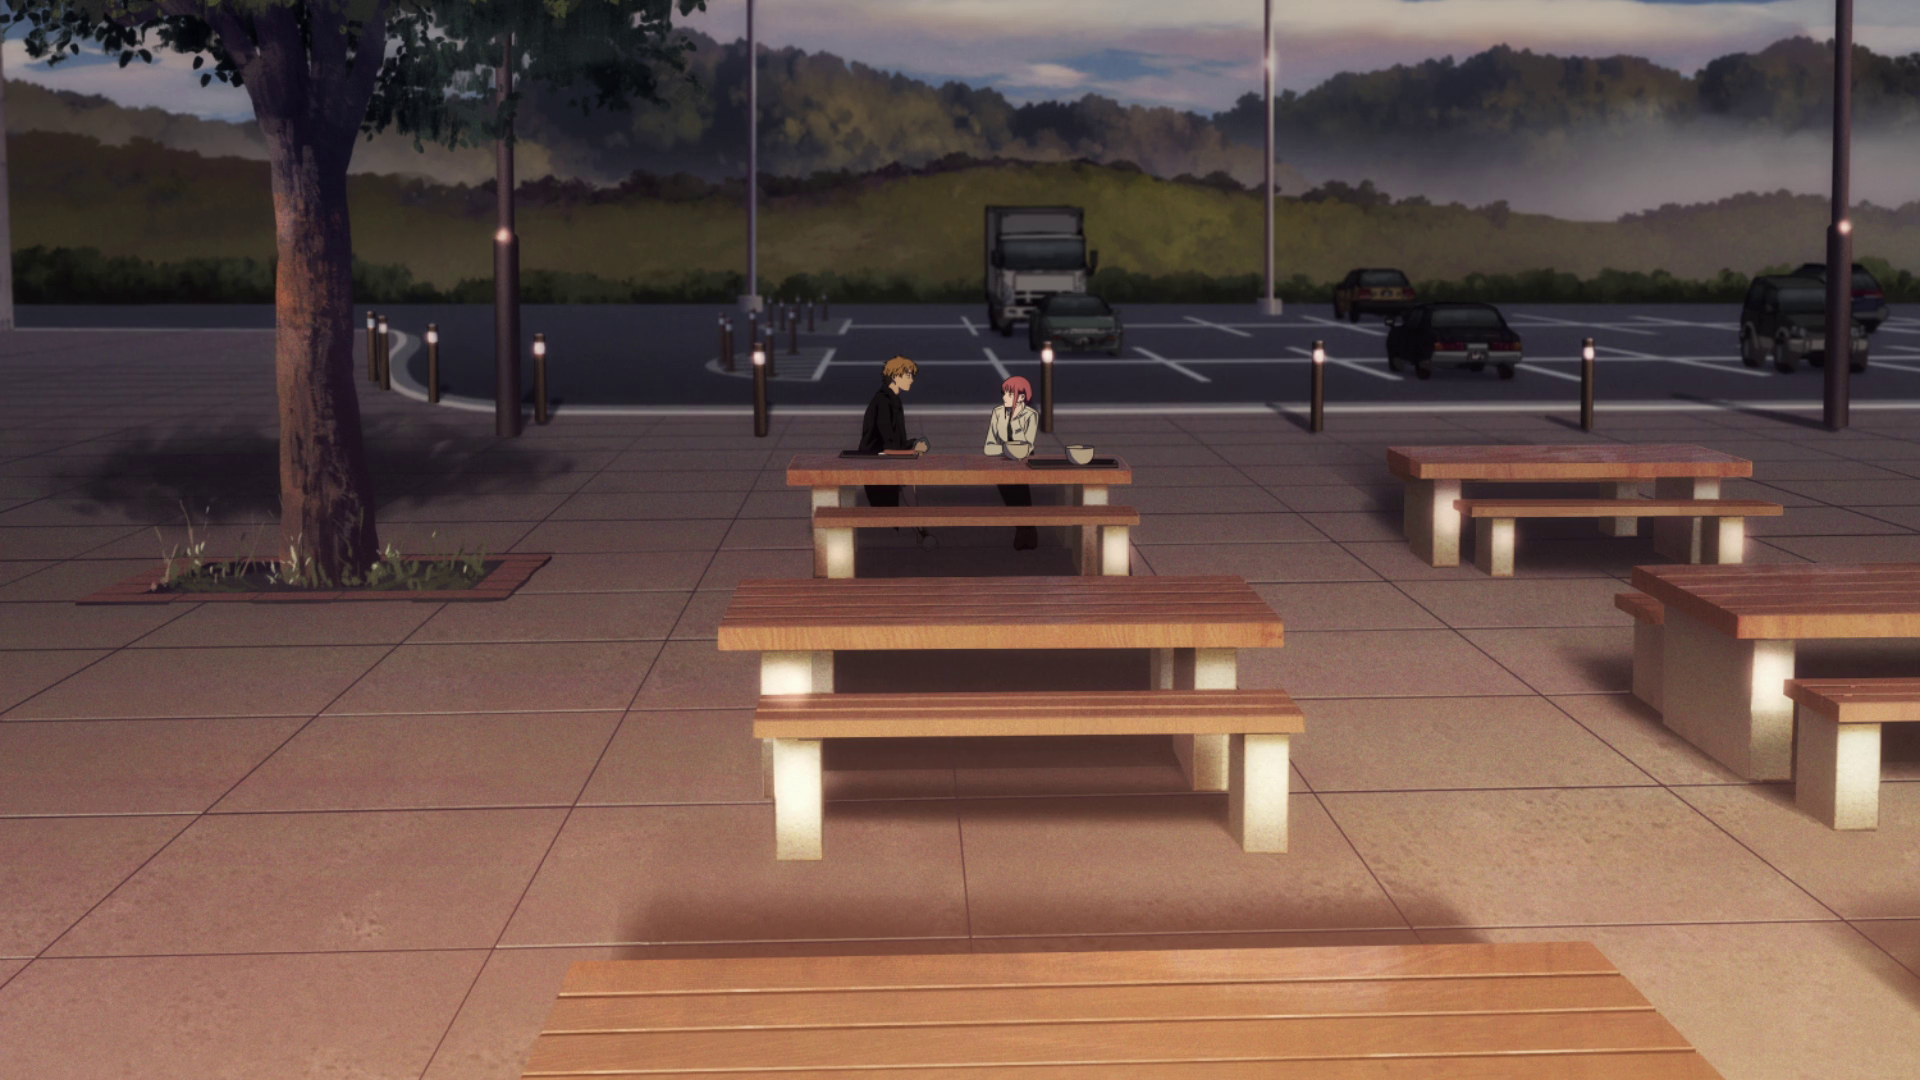 Anime 1920x1080 Chainsaw Man Makima (Chainsaw Man) anime anime girls anime boys Anime screenshot table trees parking lot sunset